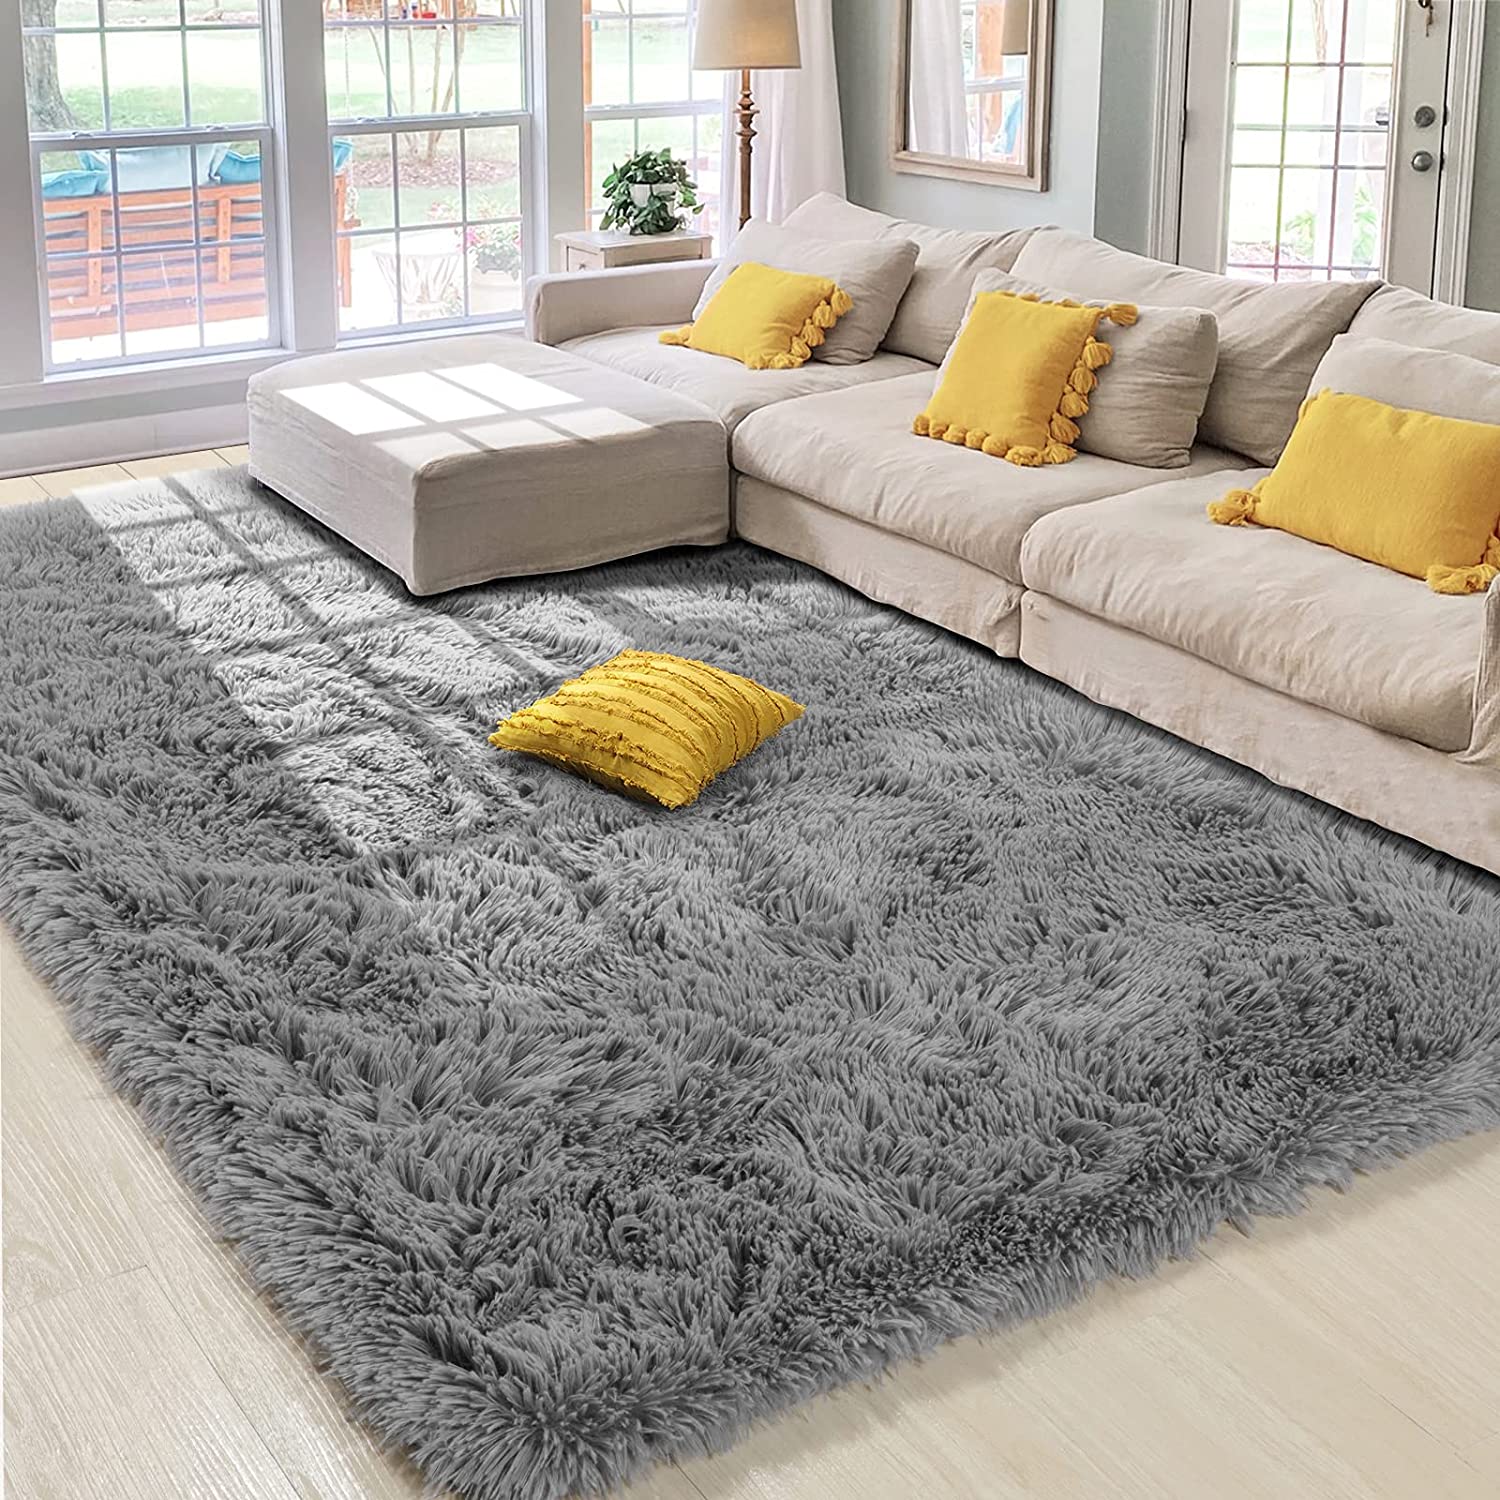 Amangel Super Soft Shag Area Rug Fluffy Carpet, Luxury Fuzzy Rugs for Living Room